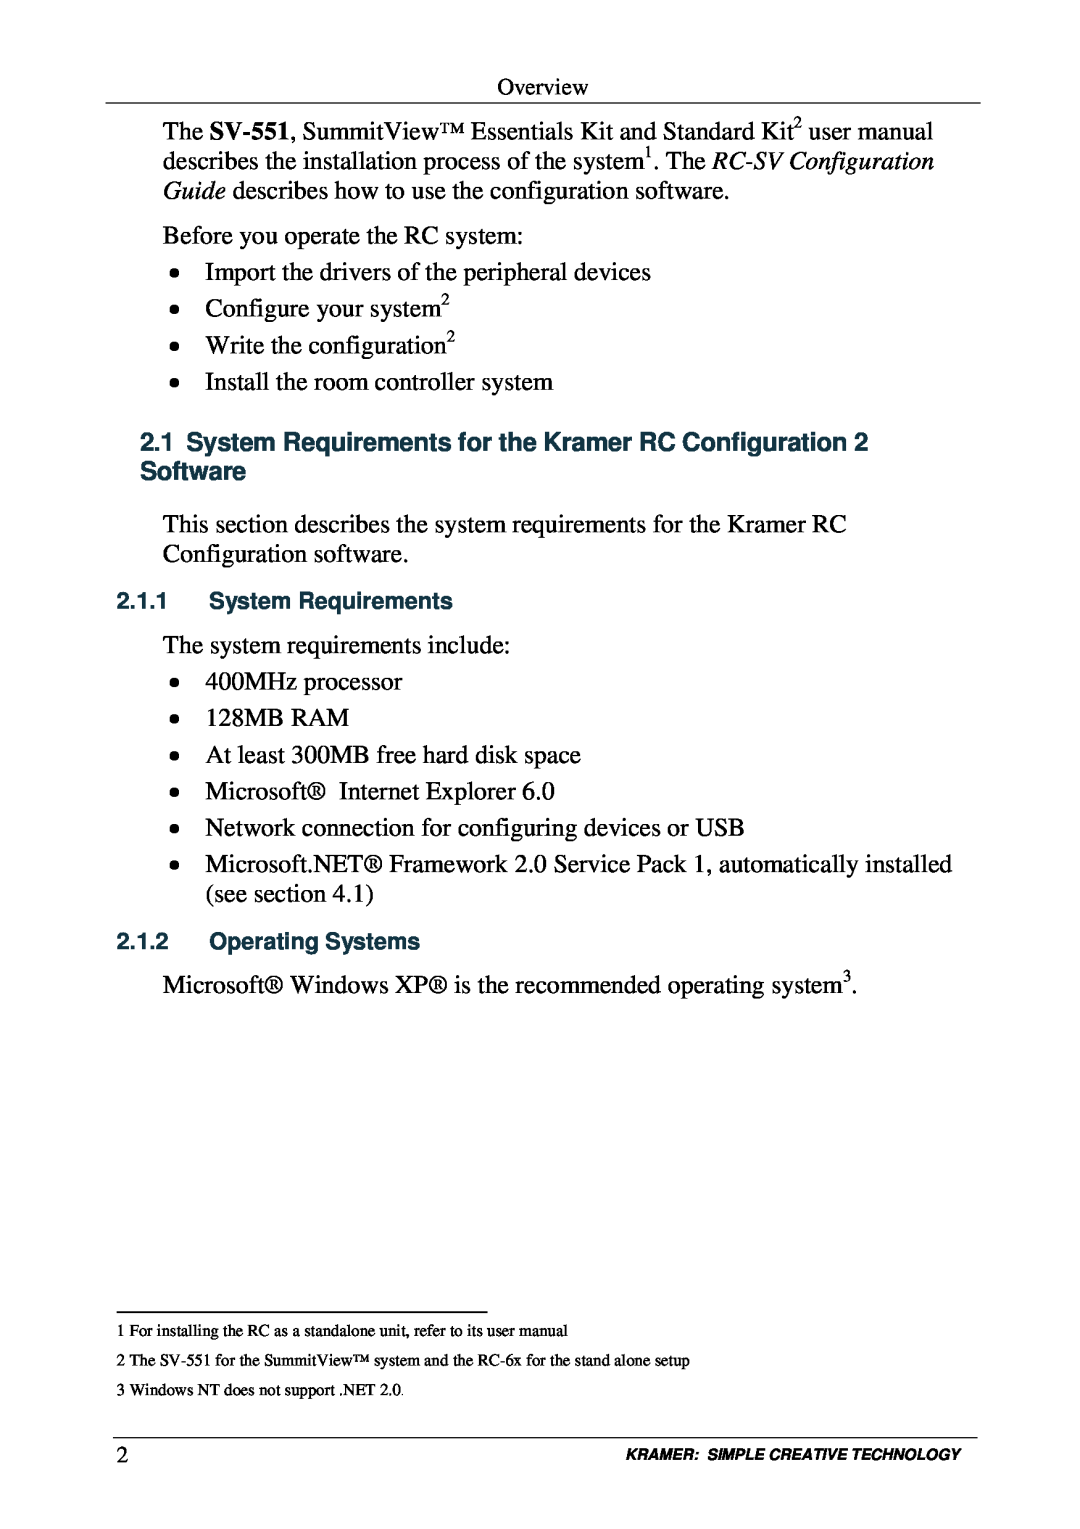 Kramer Electronics RC-SV manual System Requirements for the Kramer RC Configuration 2 Software 